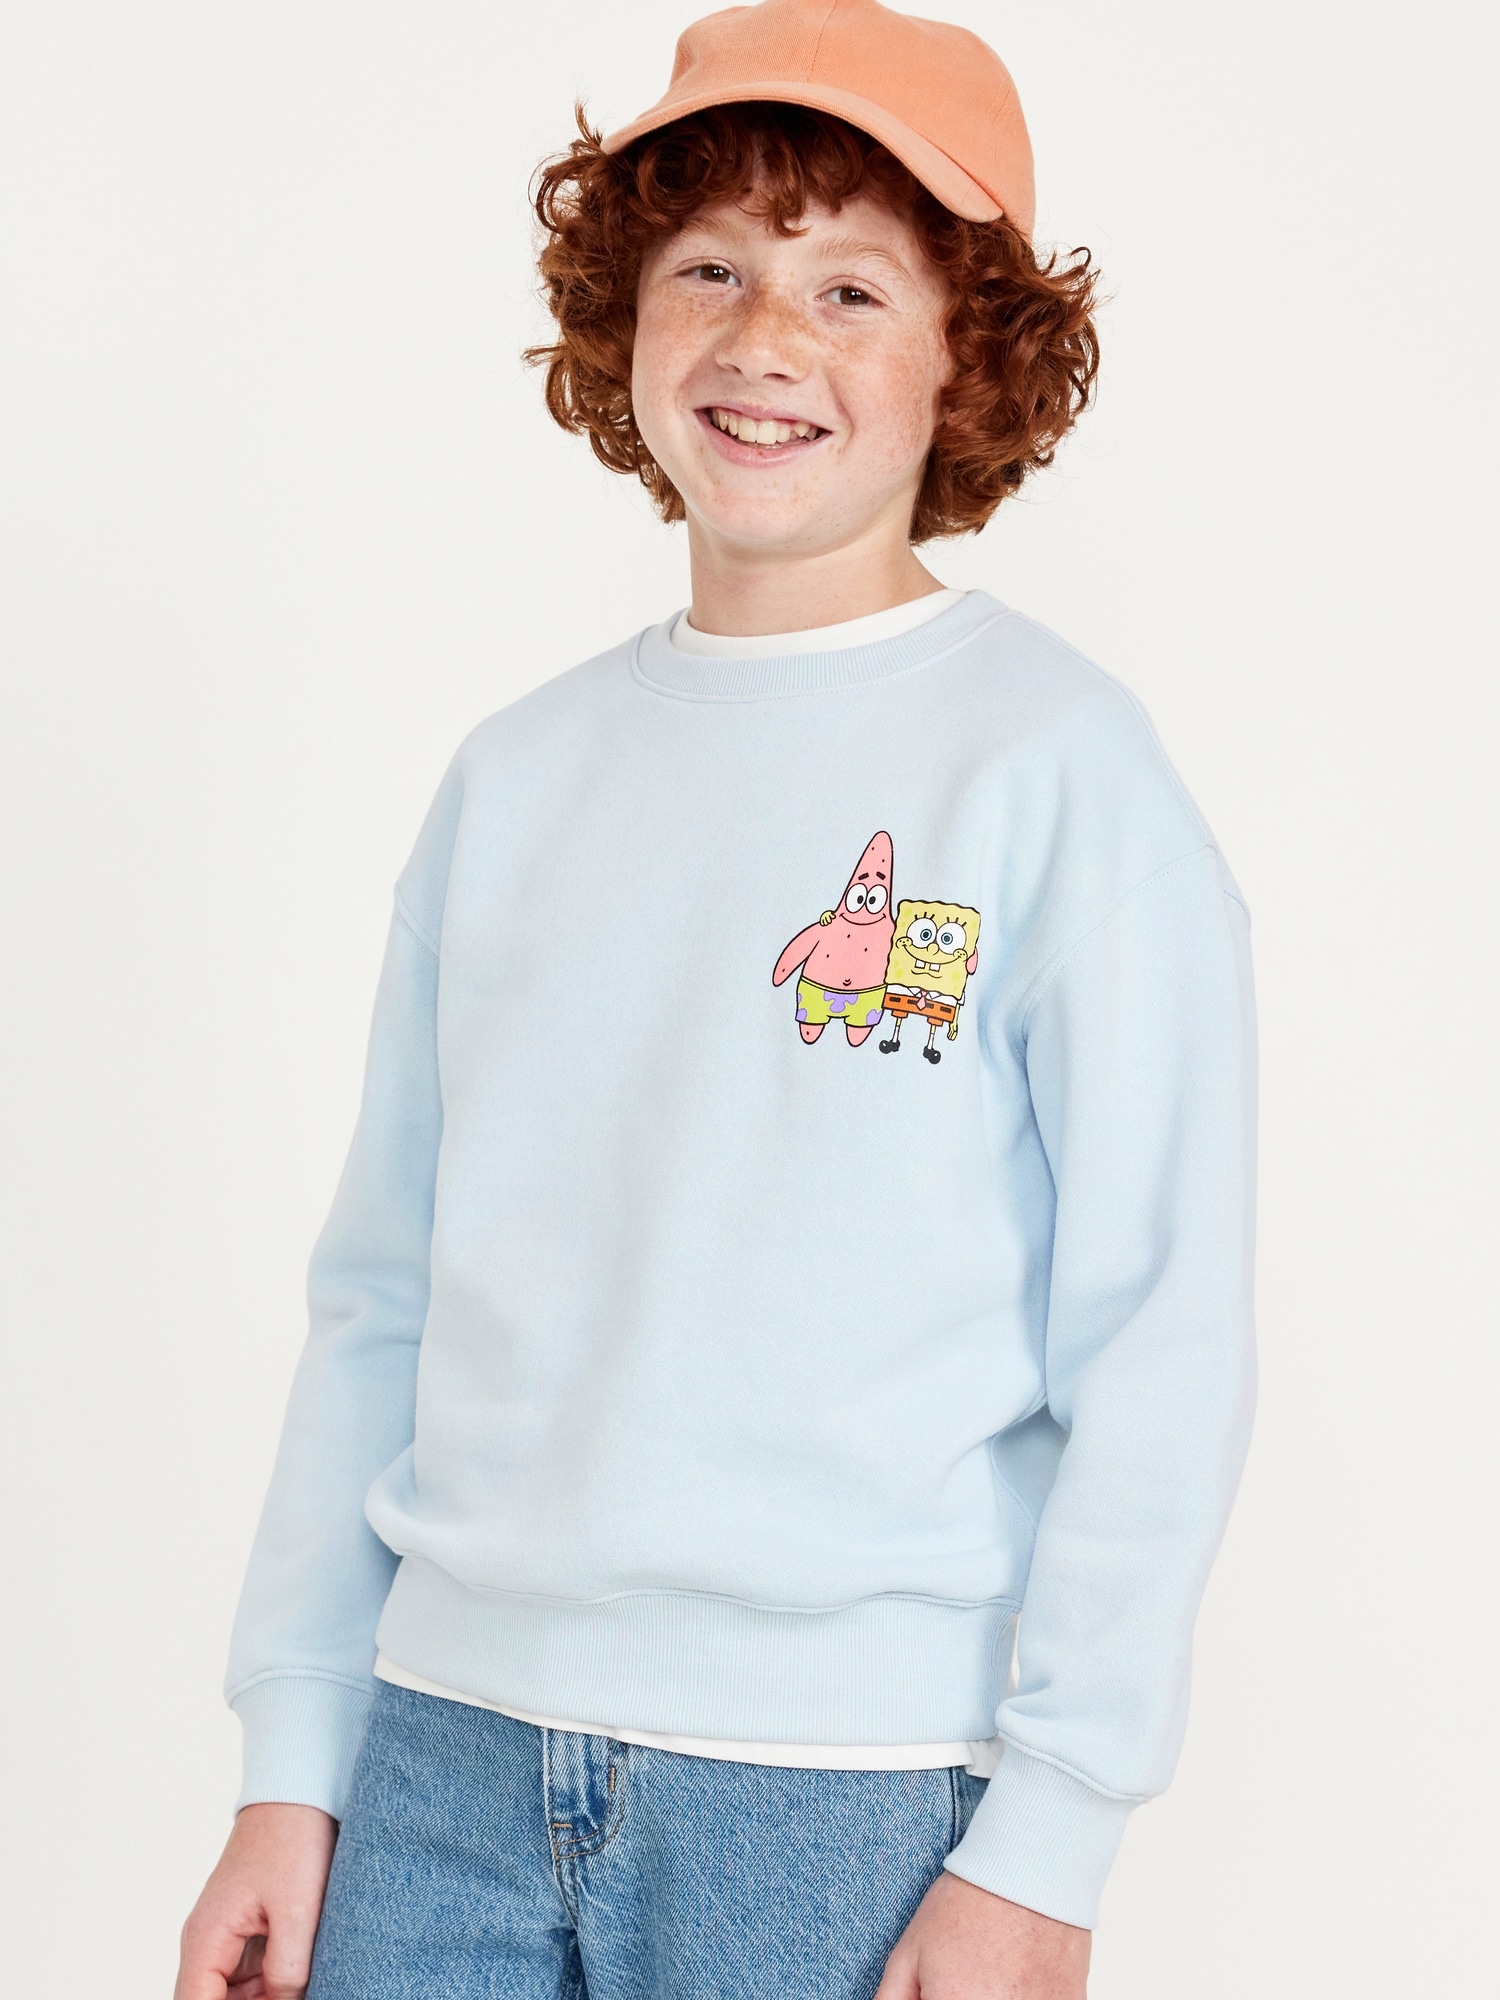 SpongeBob SquarePants™  Gender-Neutral Crew-Neck Sweatshirt for Kids